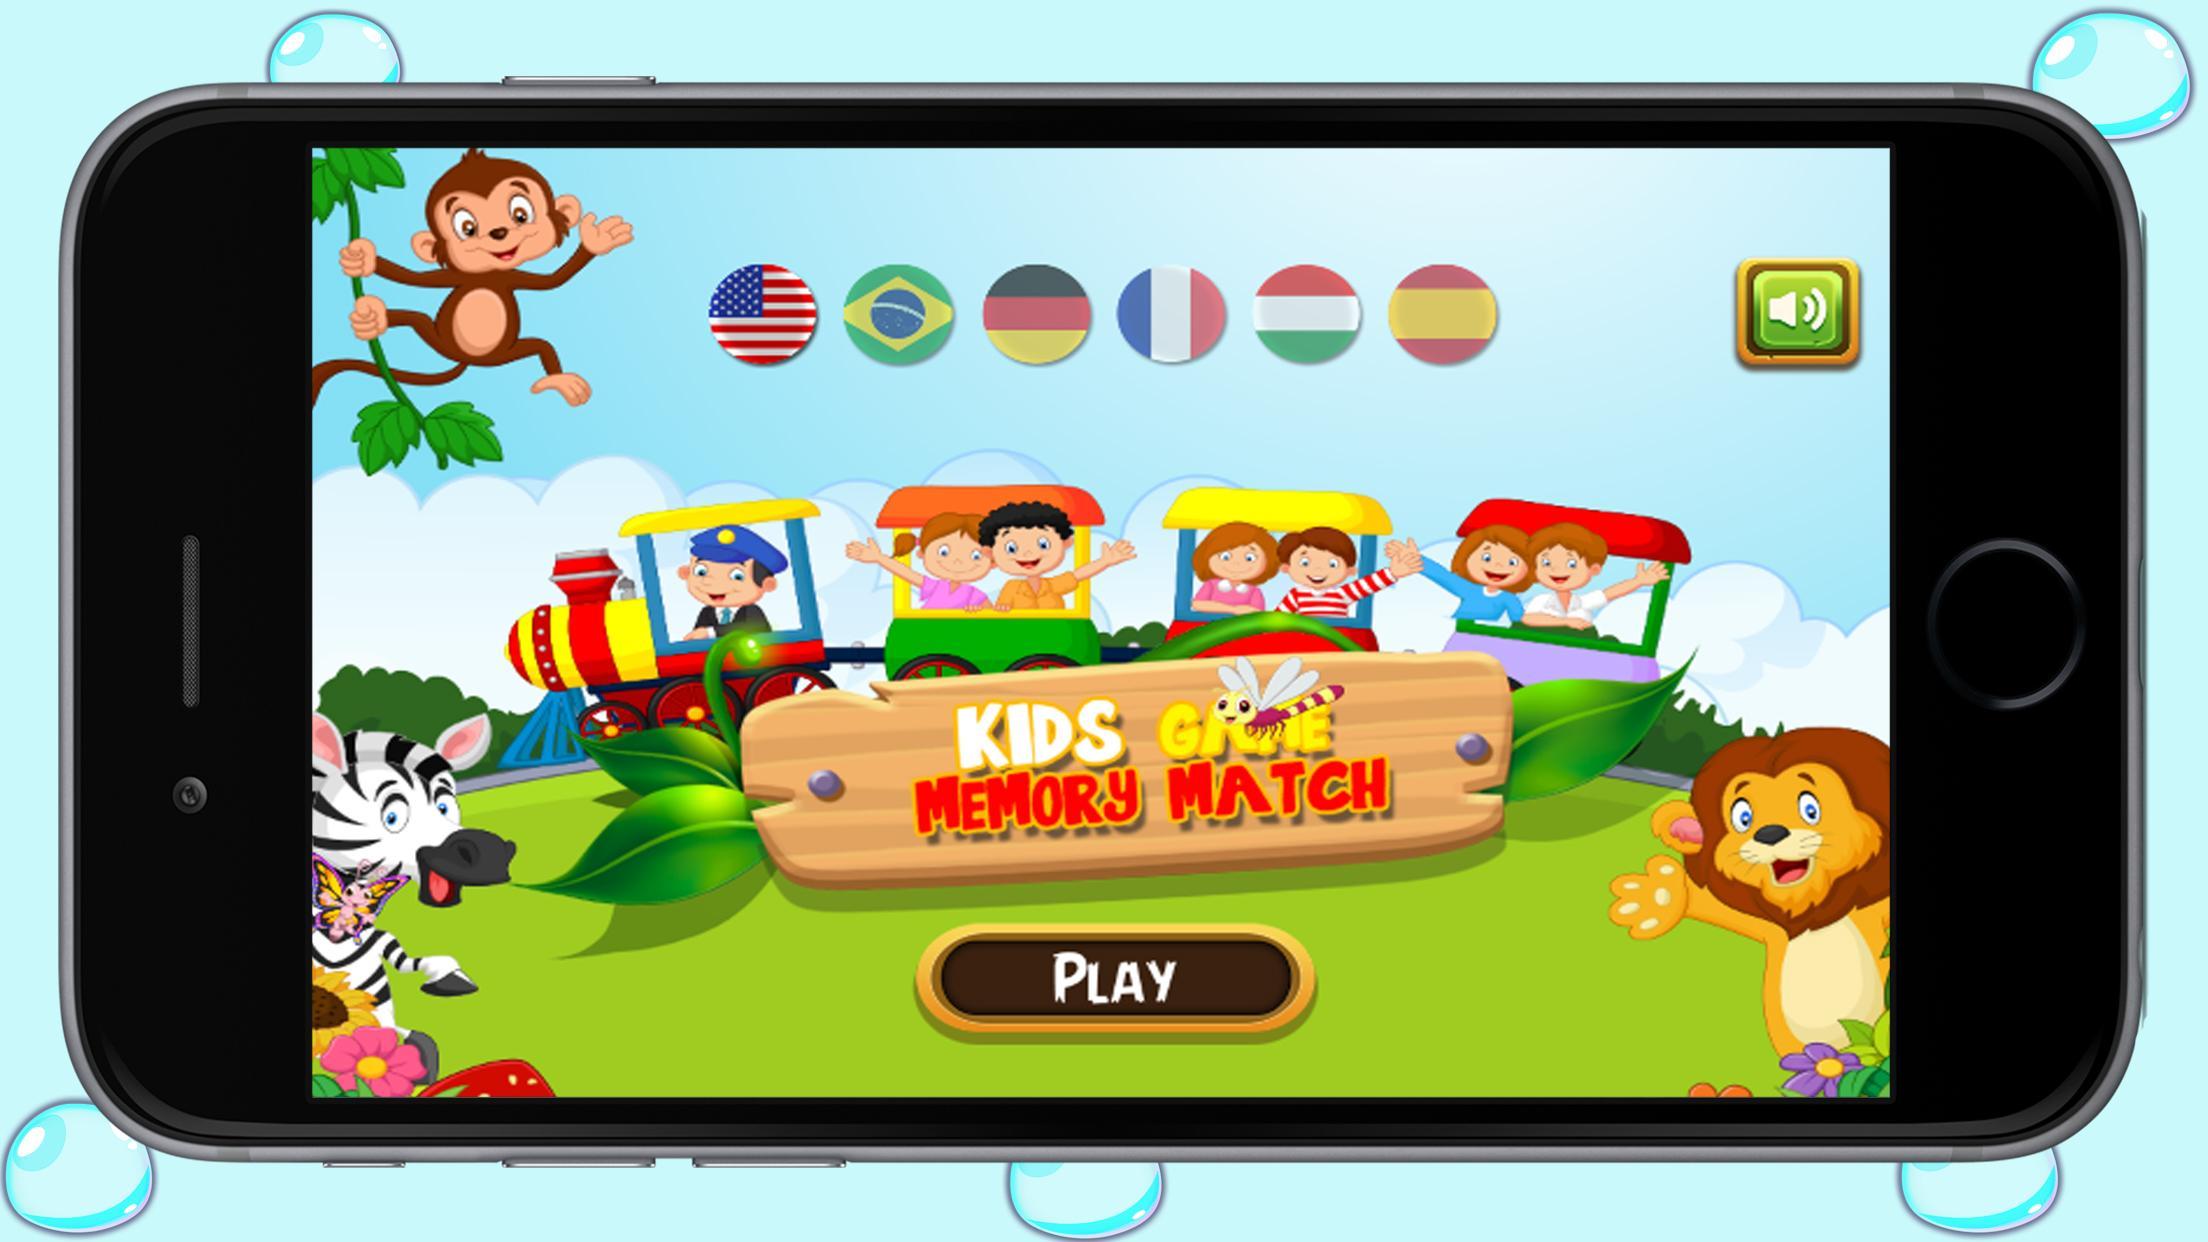 Kids game app. Kids игра. Дети андроиды. Memory game Android. Игра про воспоминания ребенка.